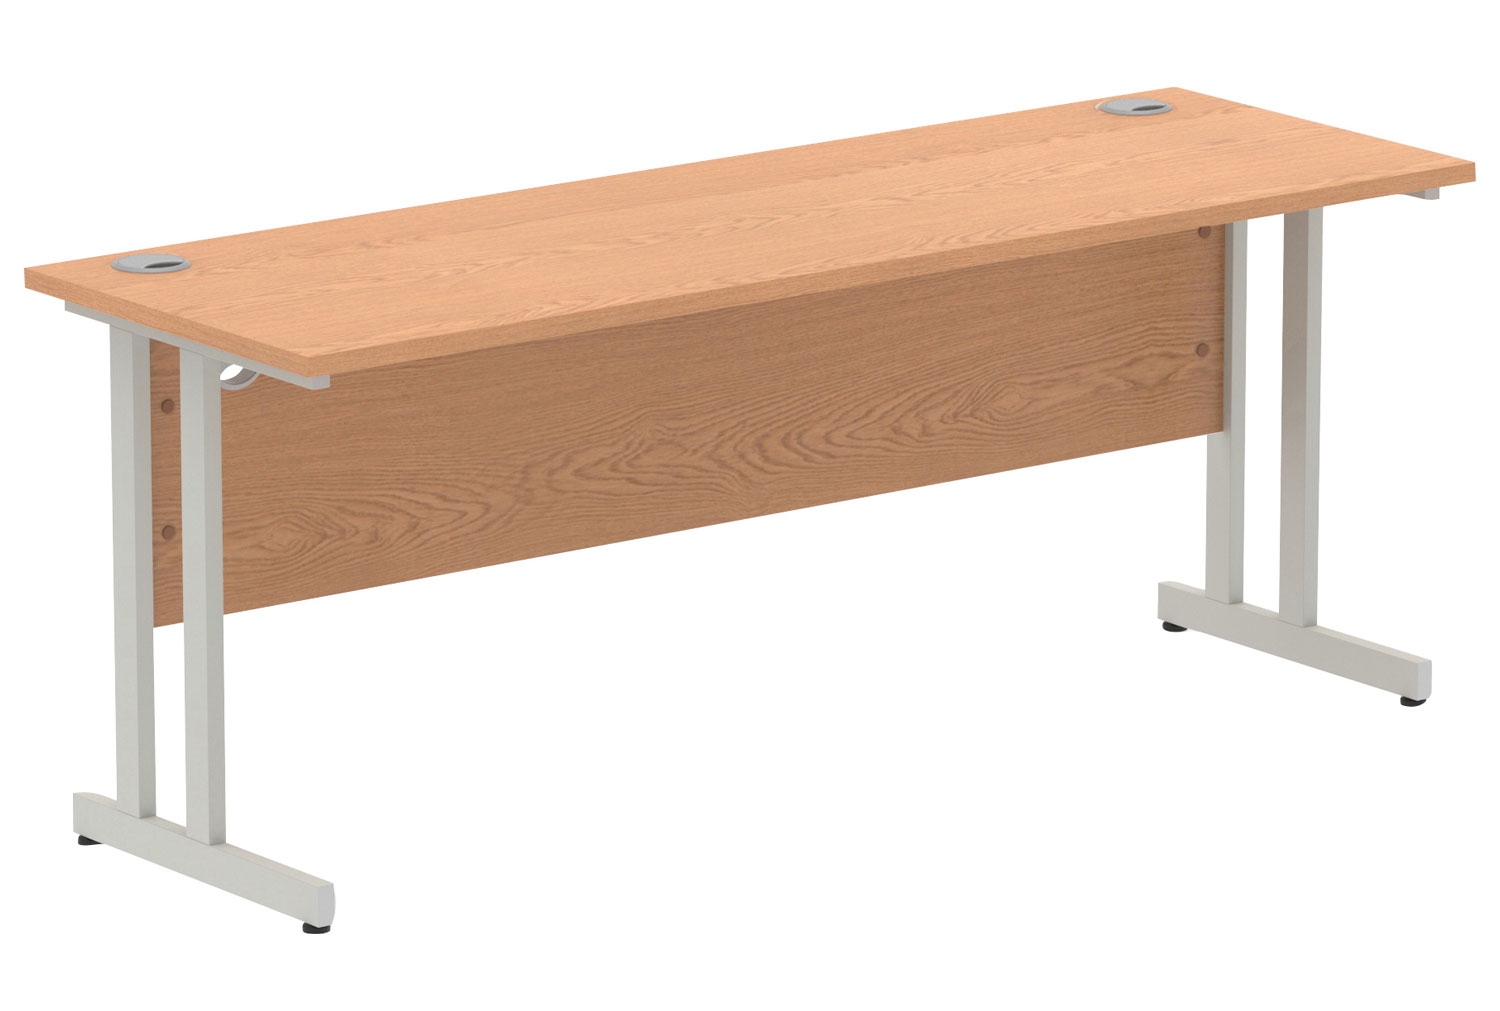 Vitali C-Leg Narrow Rectangular Desk (Silver Legs)